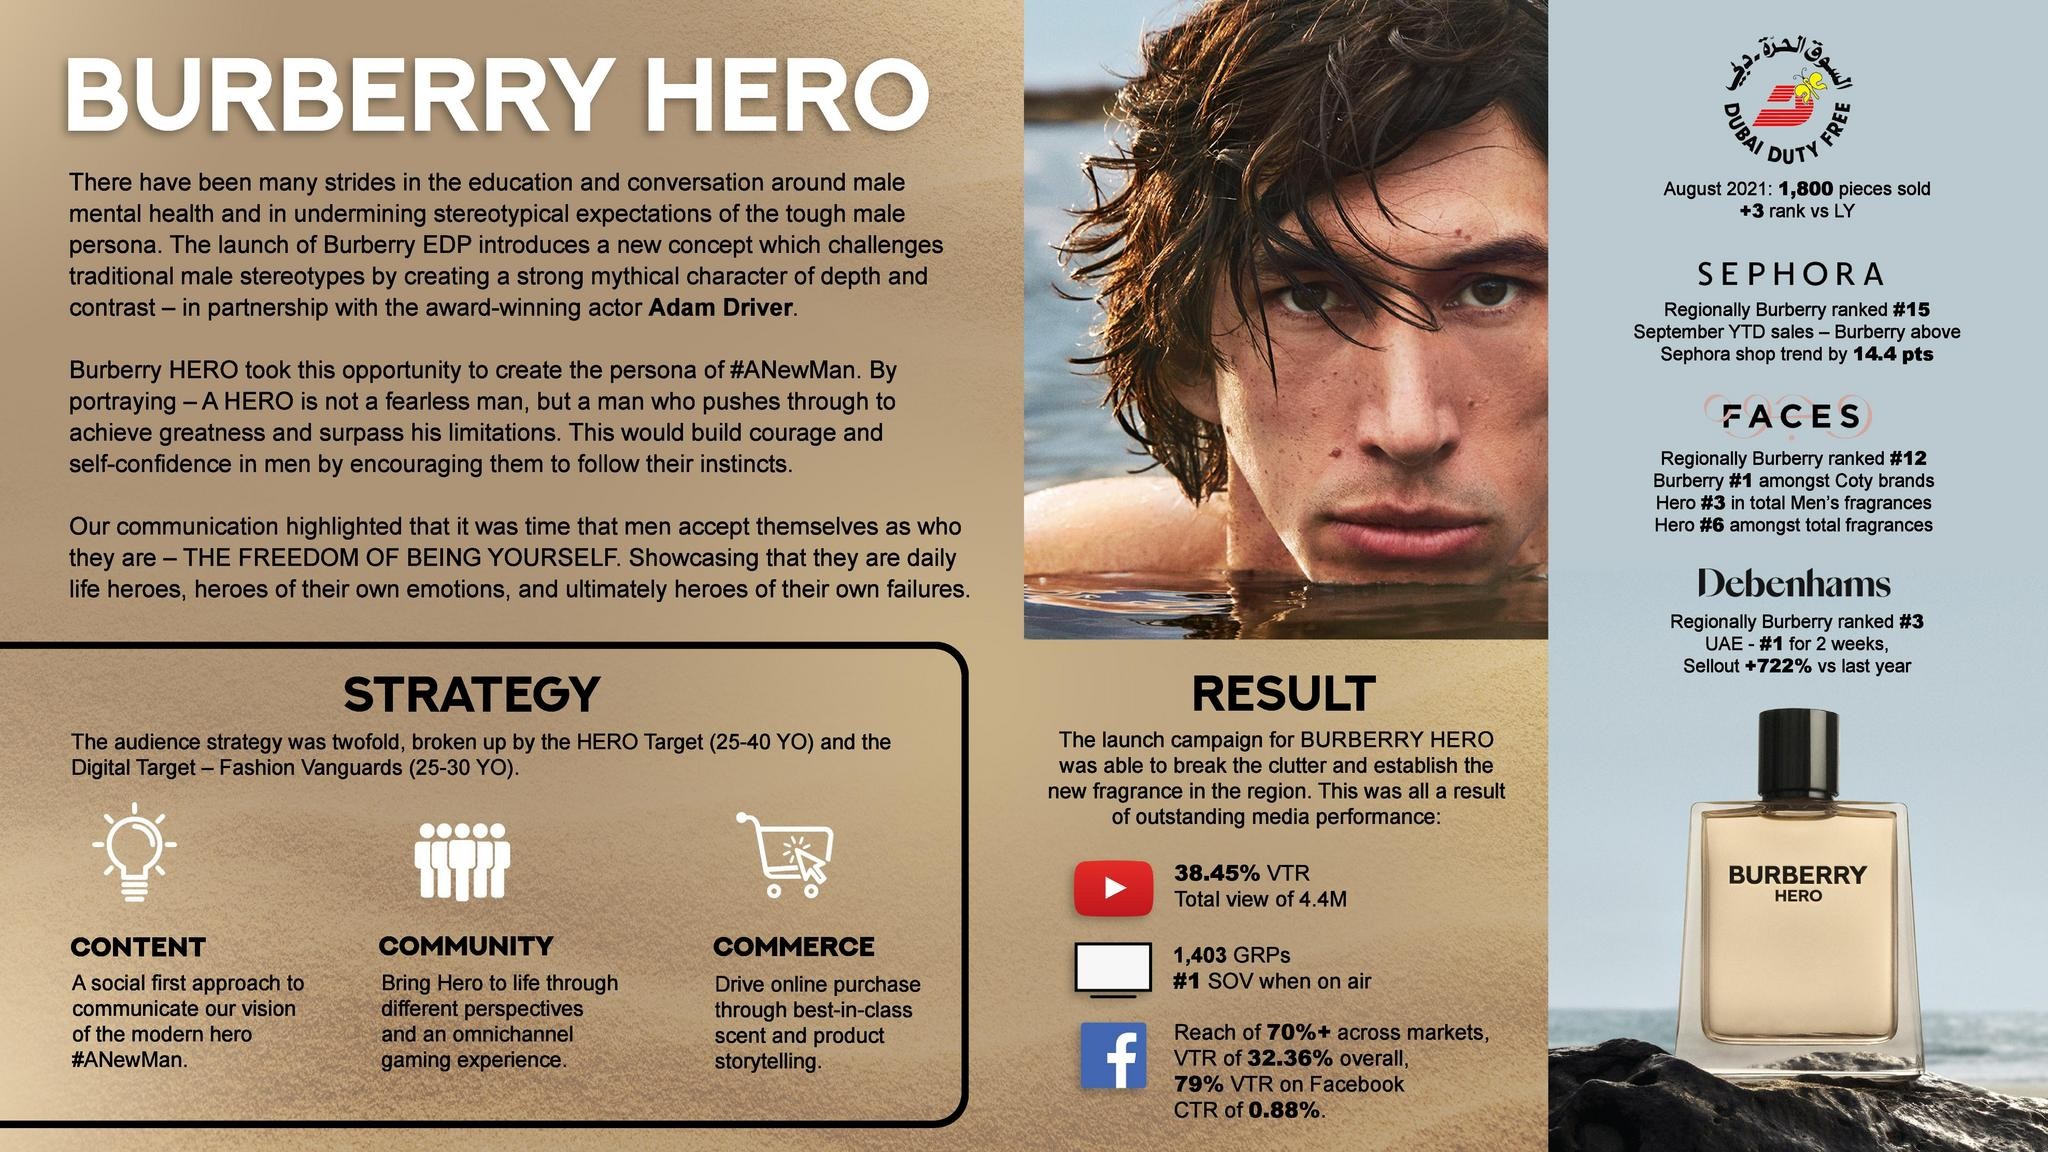 Burberry Hero EDP